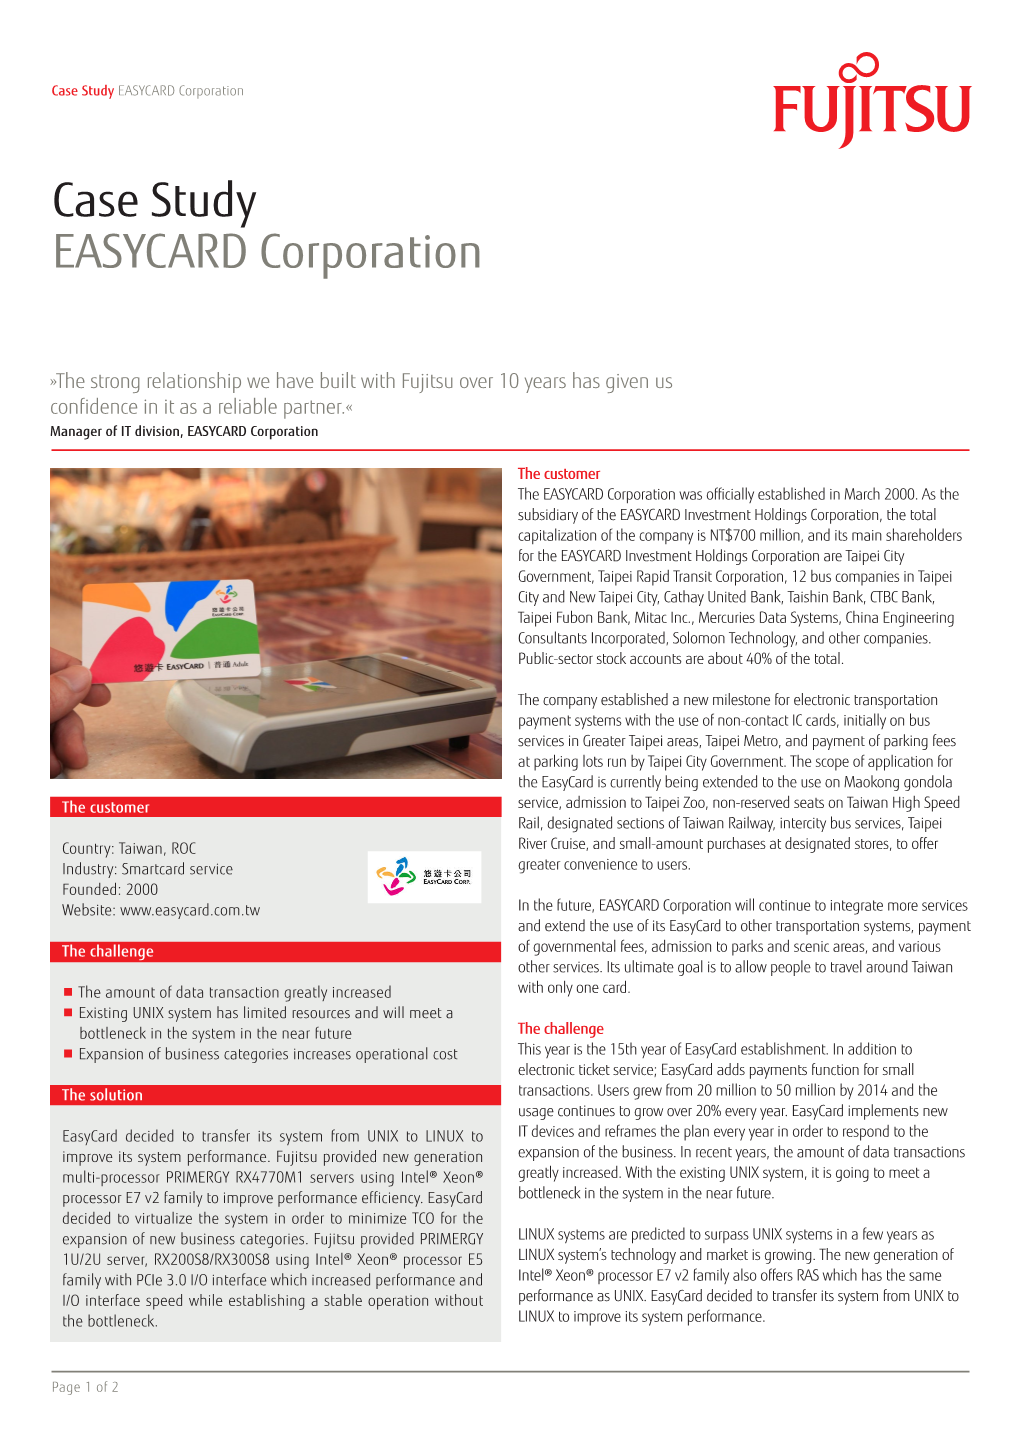 Case Study EASYCARD Corporation